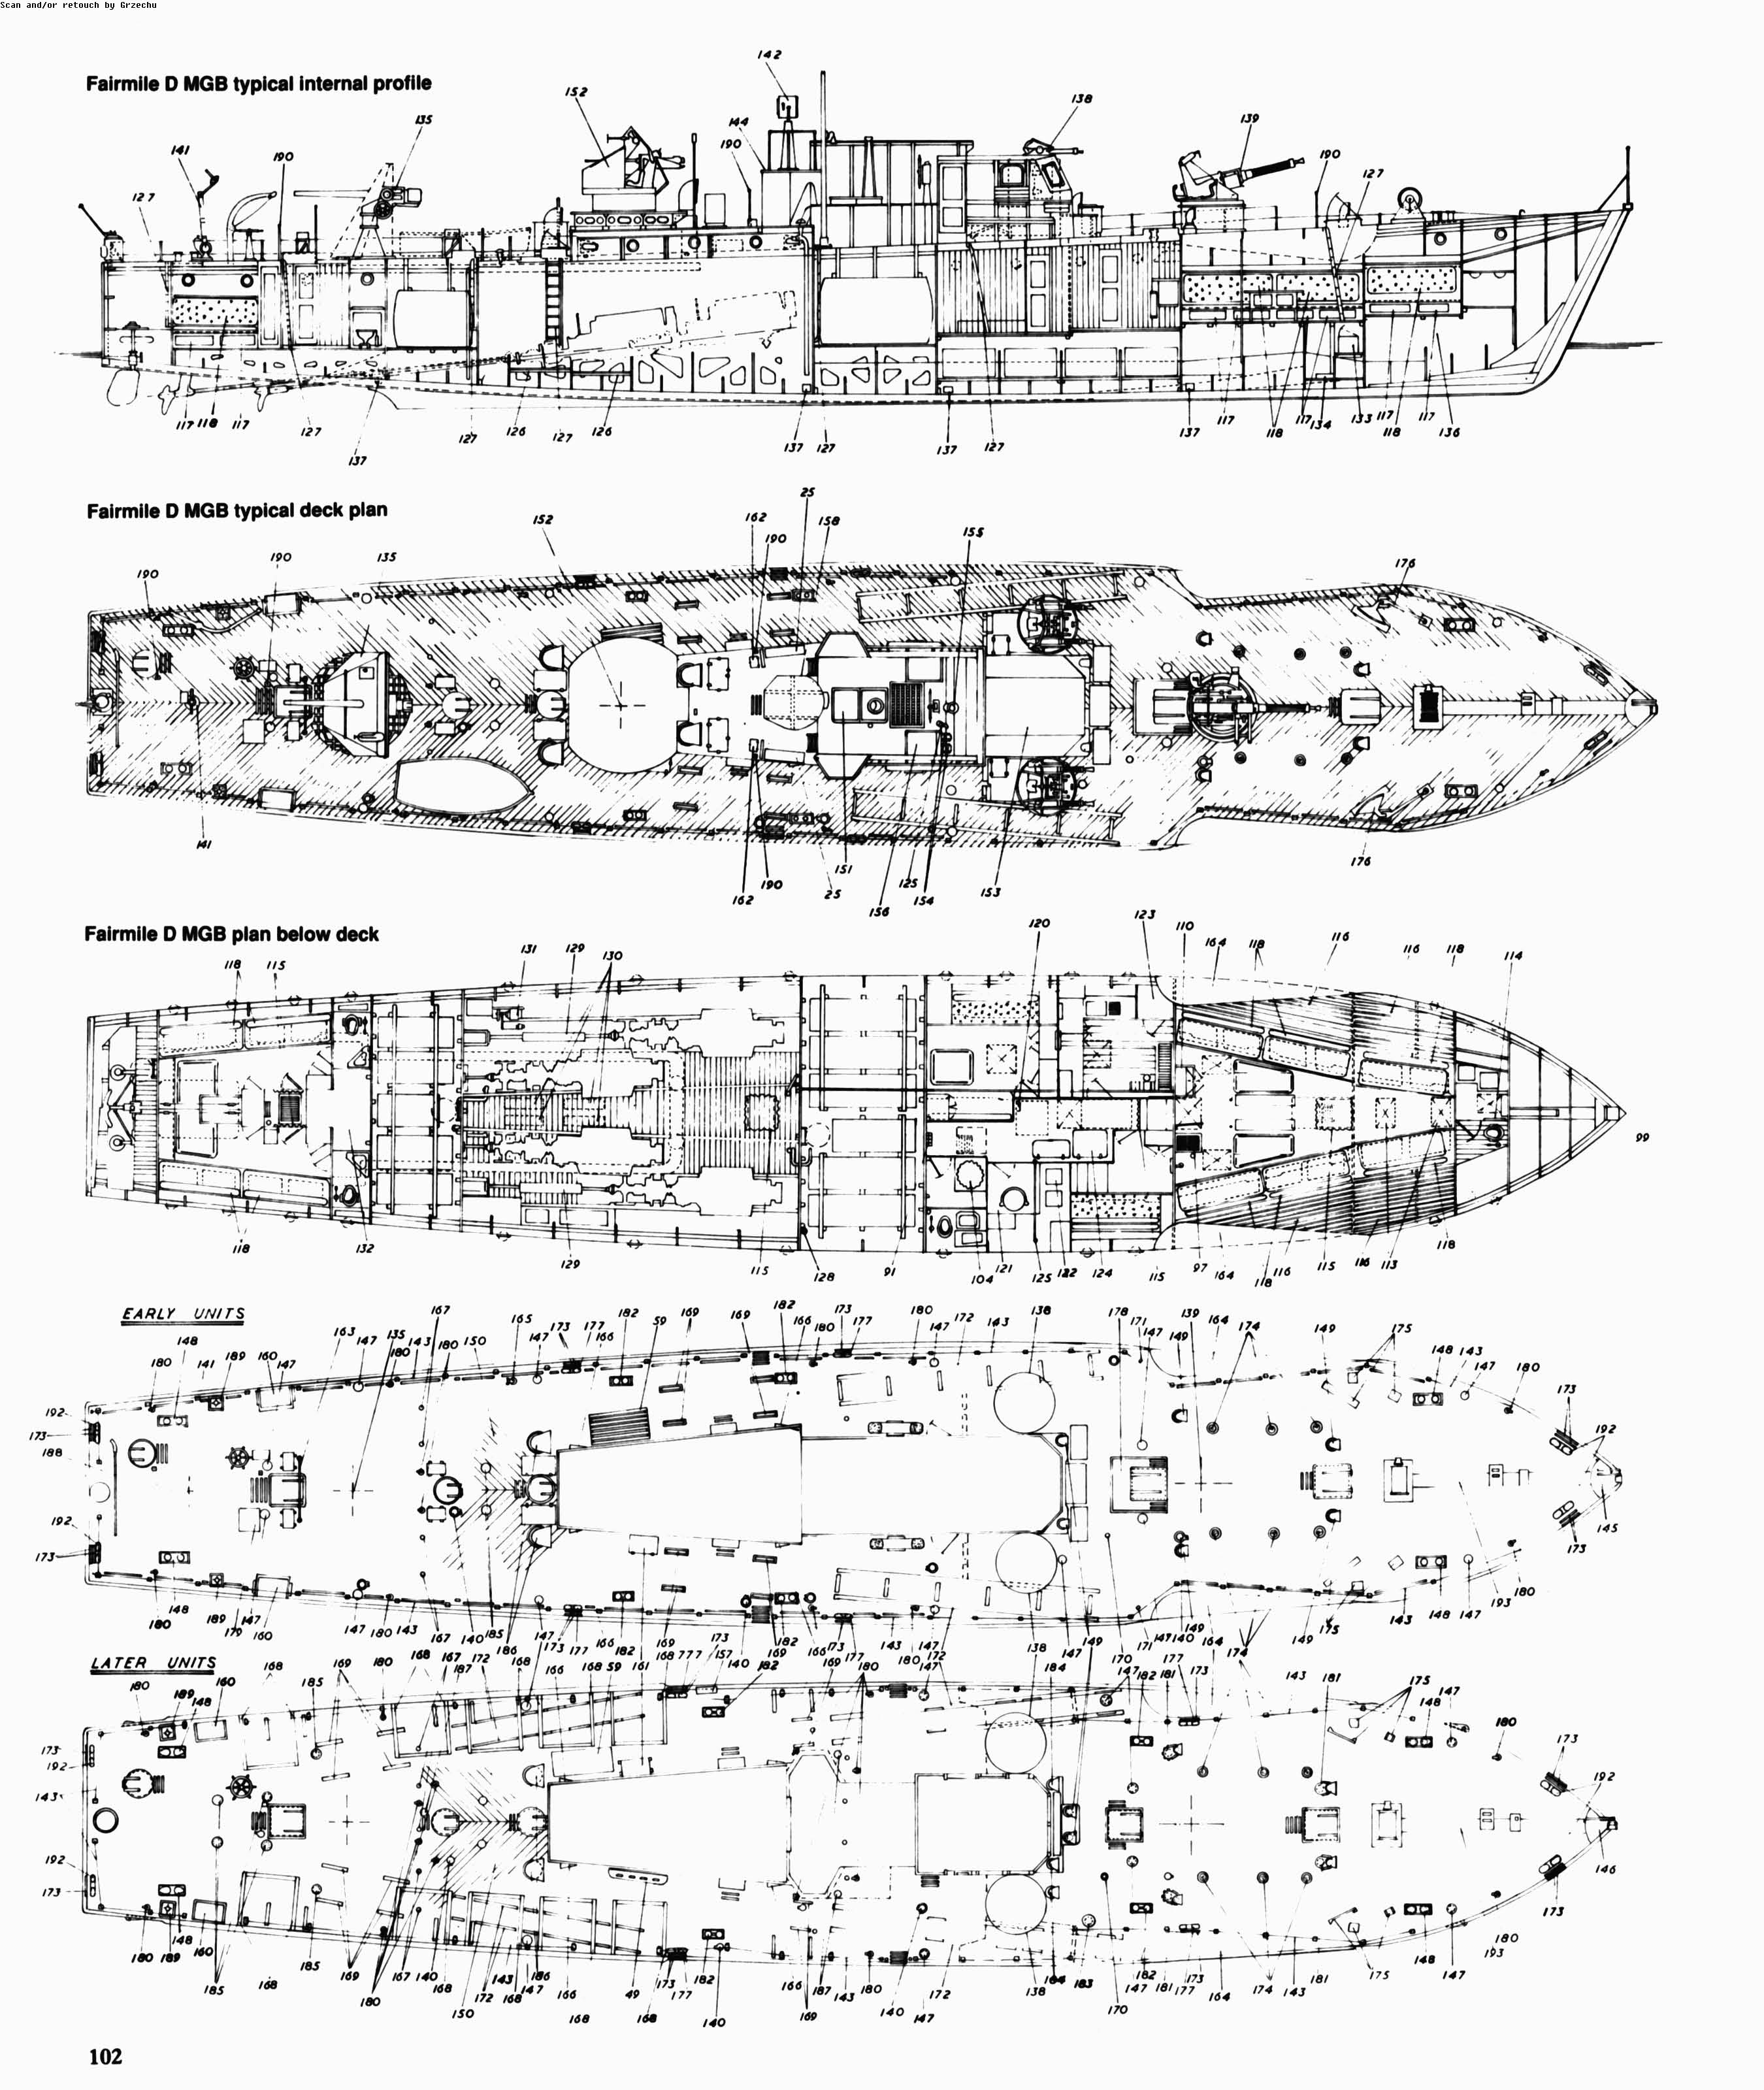 Allied Coastal Forces of World War II (1) Fairmile designs & U.S. submarine chasers_Page_104.jpg